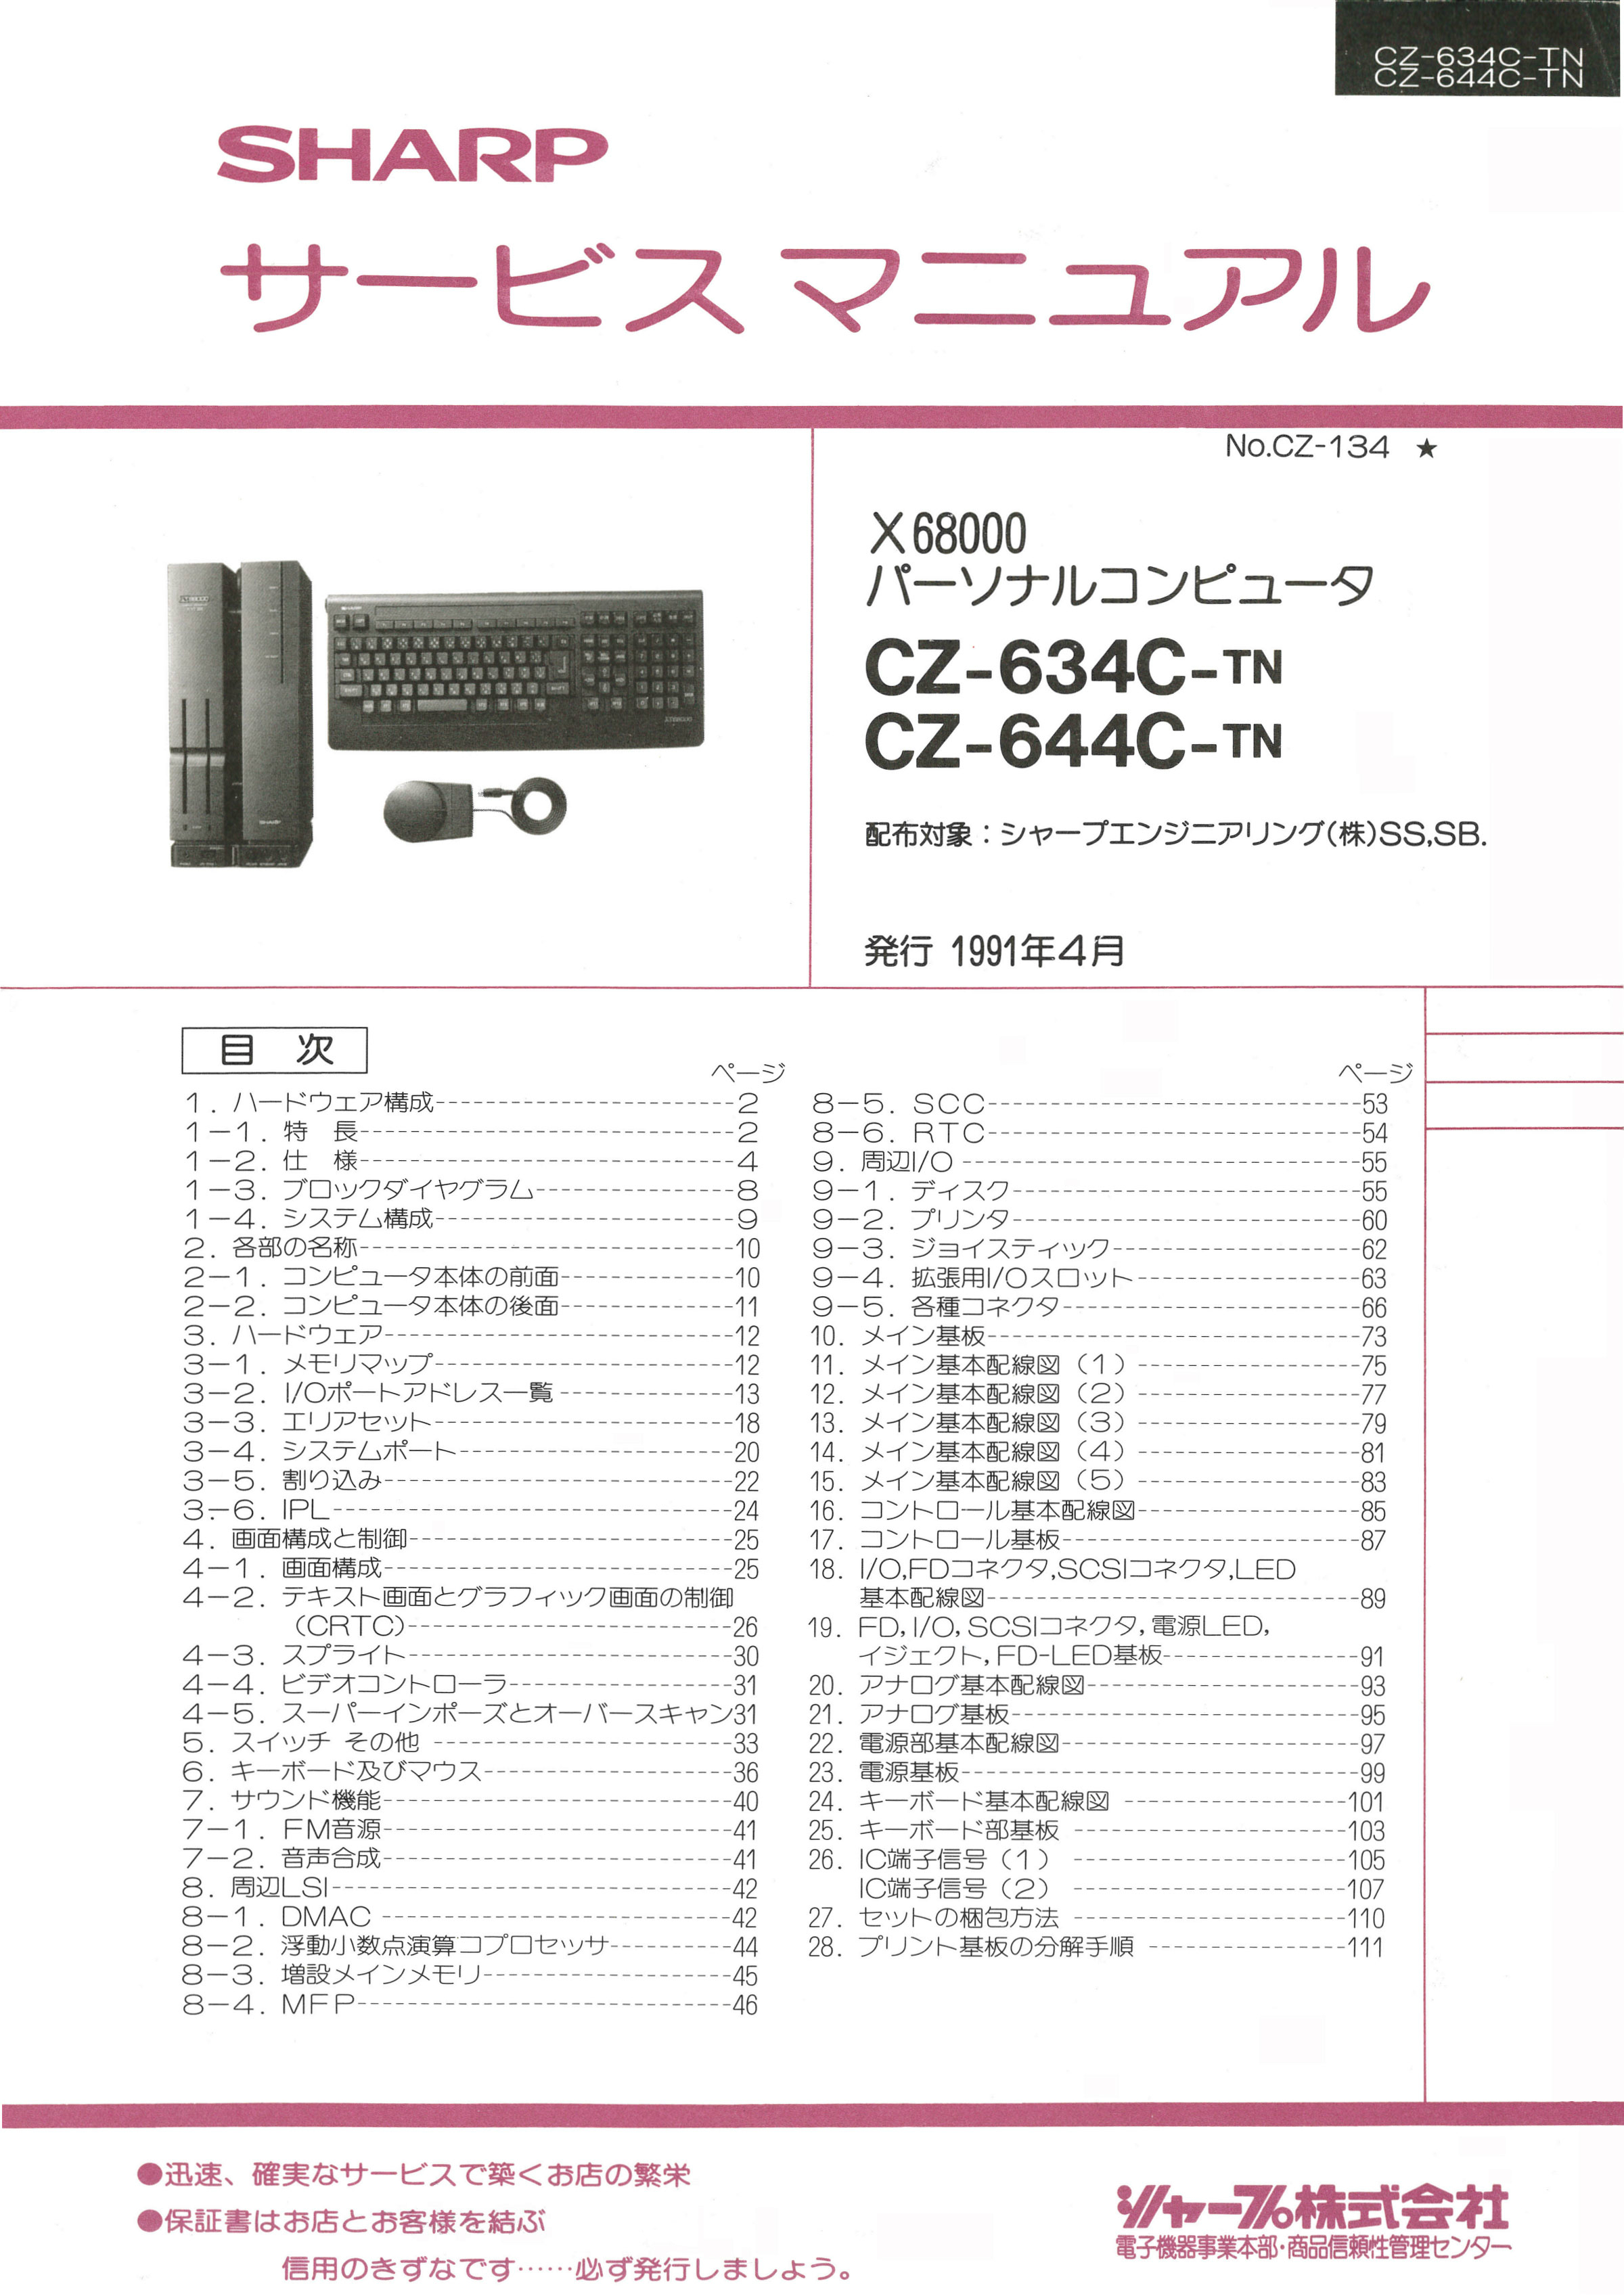 T[rX}jA X68000 CZ-634C/CZ-644C